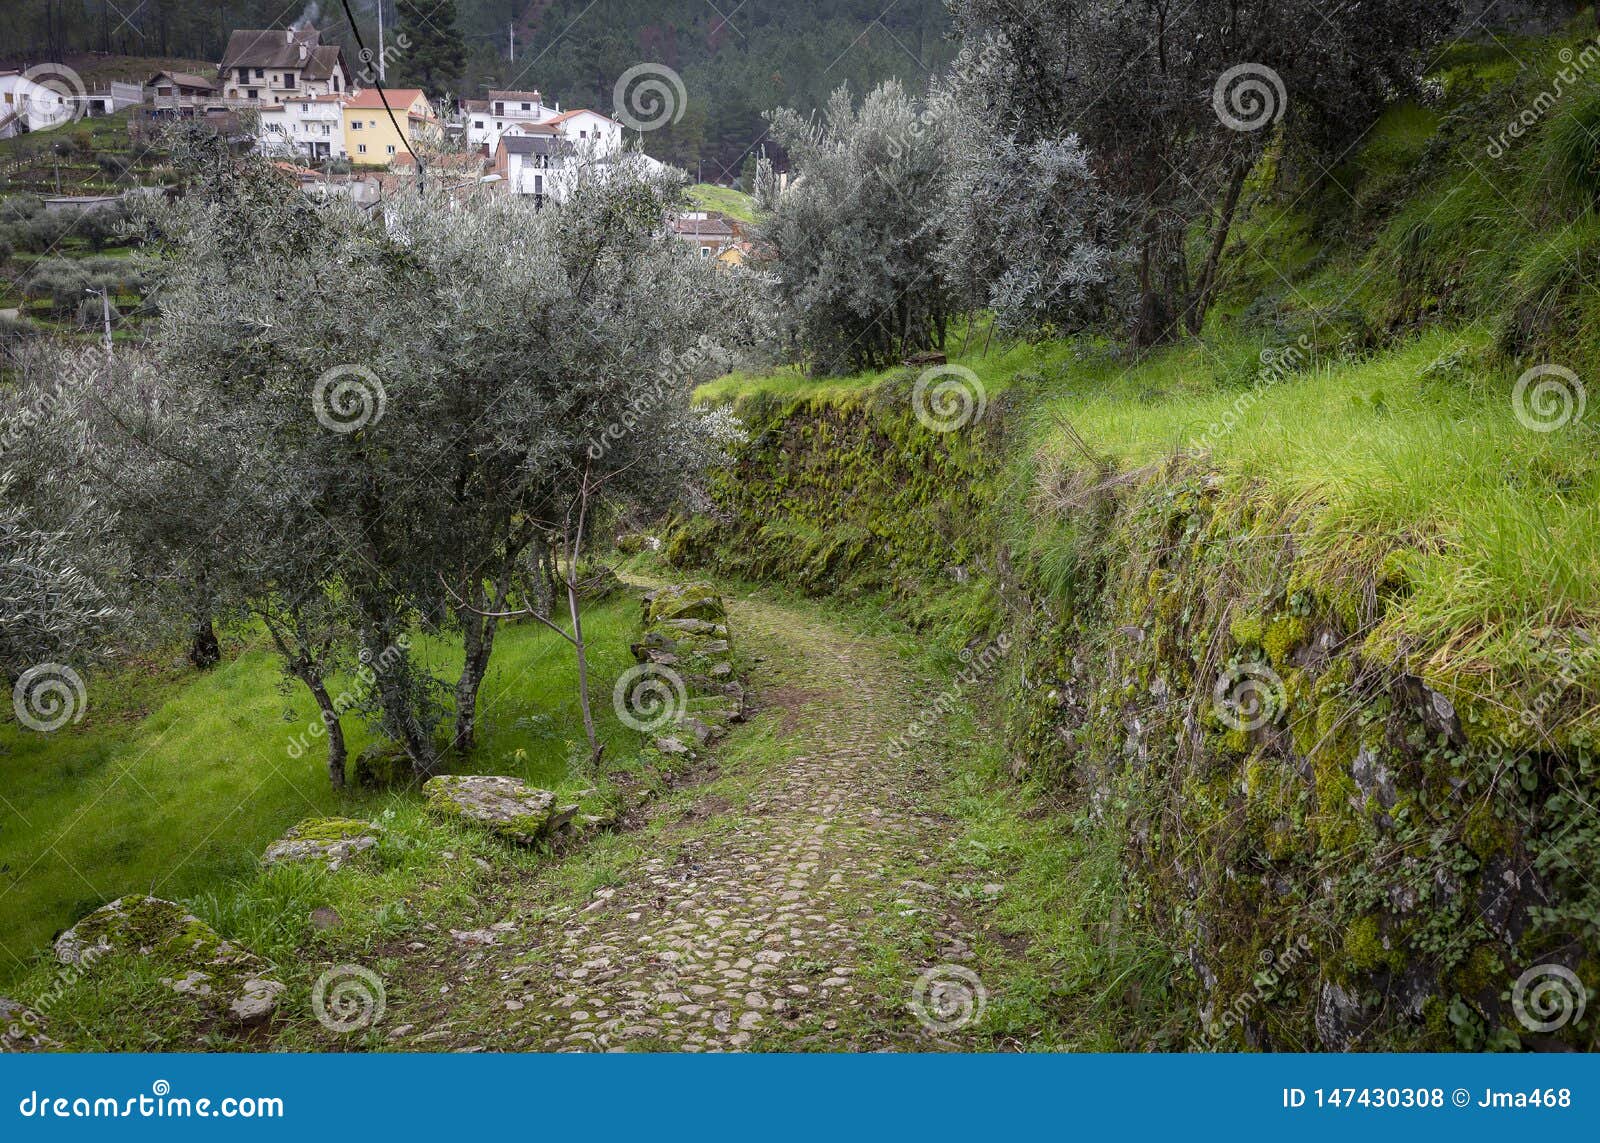 a rural path with stones in barroca schist village